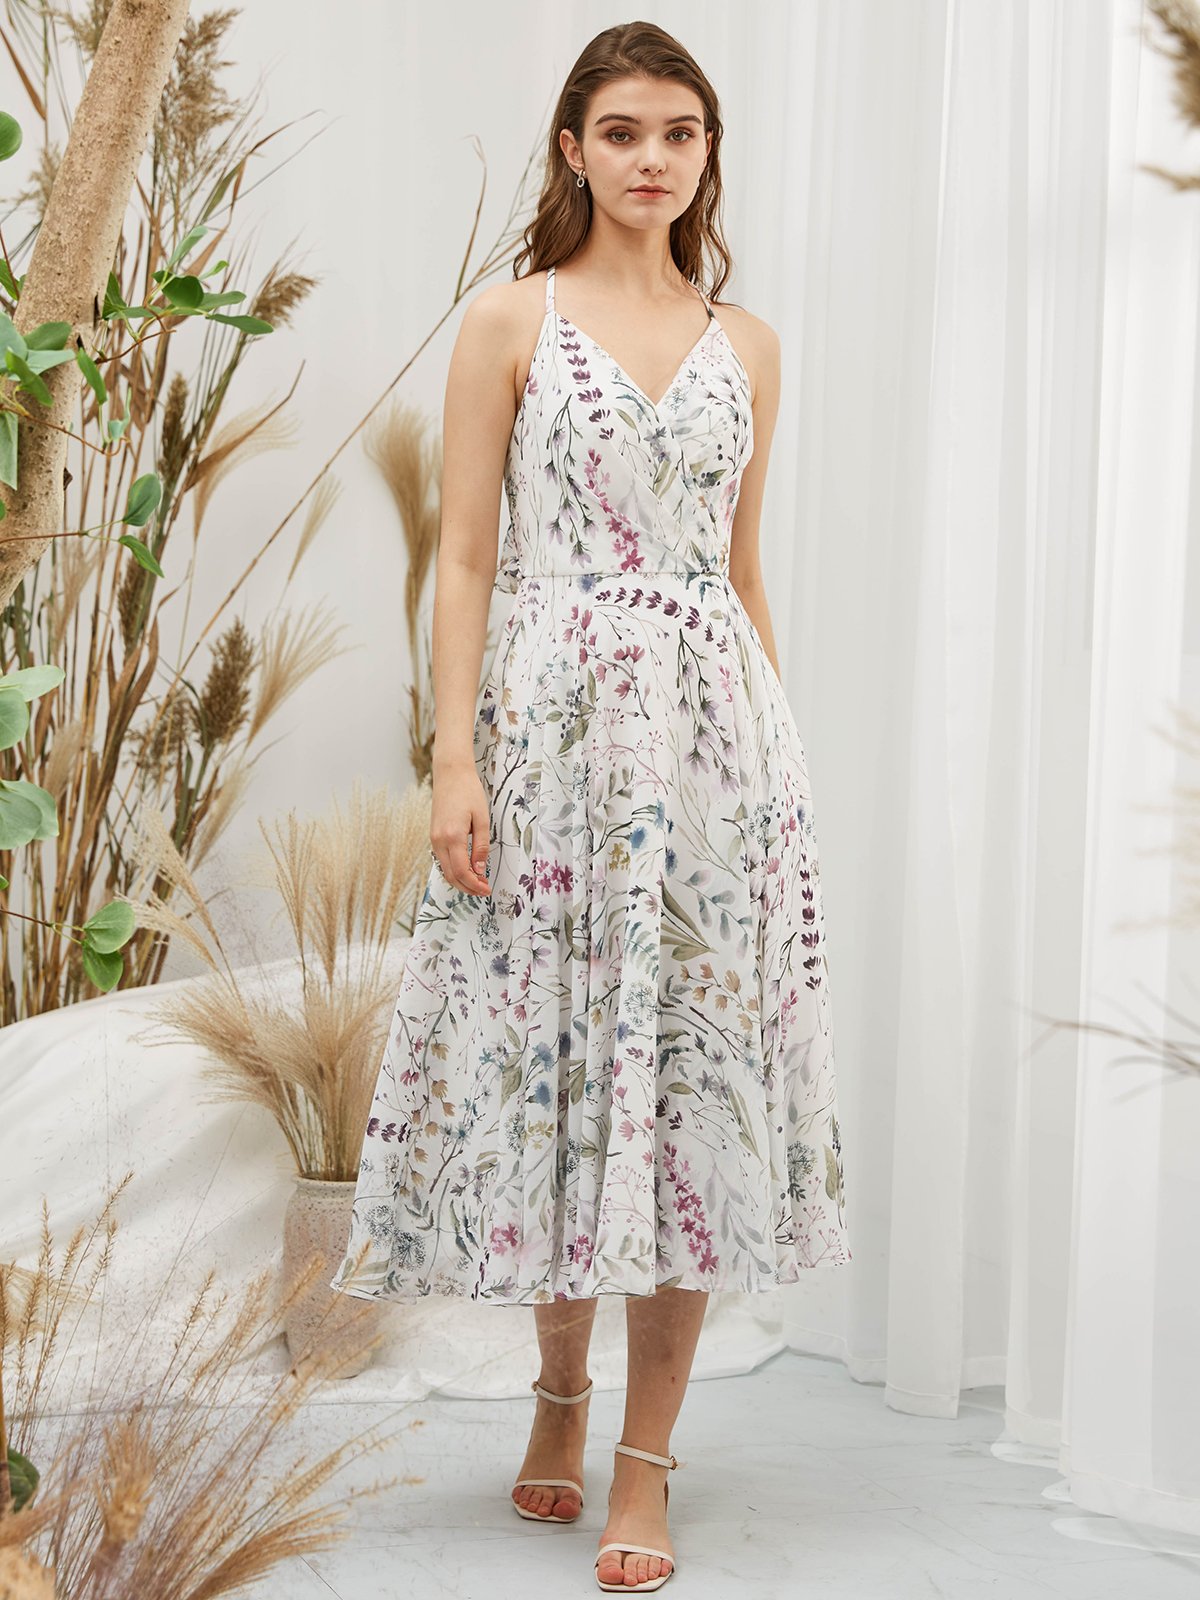 Spaghetti Straps V Neck Chiffon Print Floral Ivory Tea Length Formal Gown